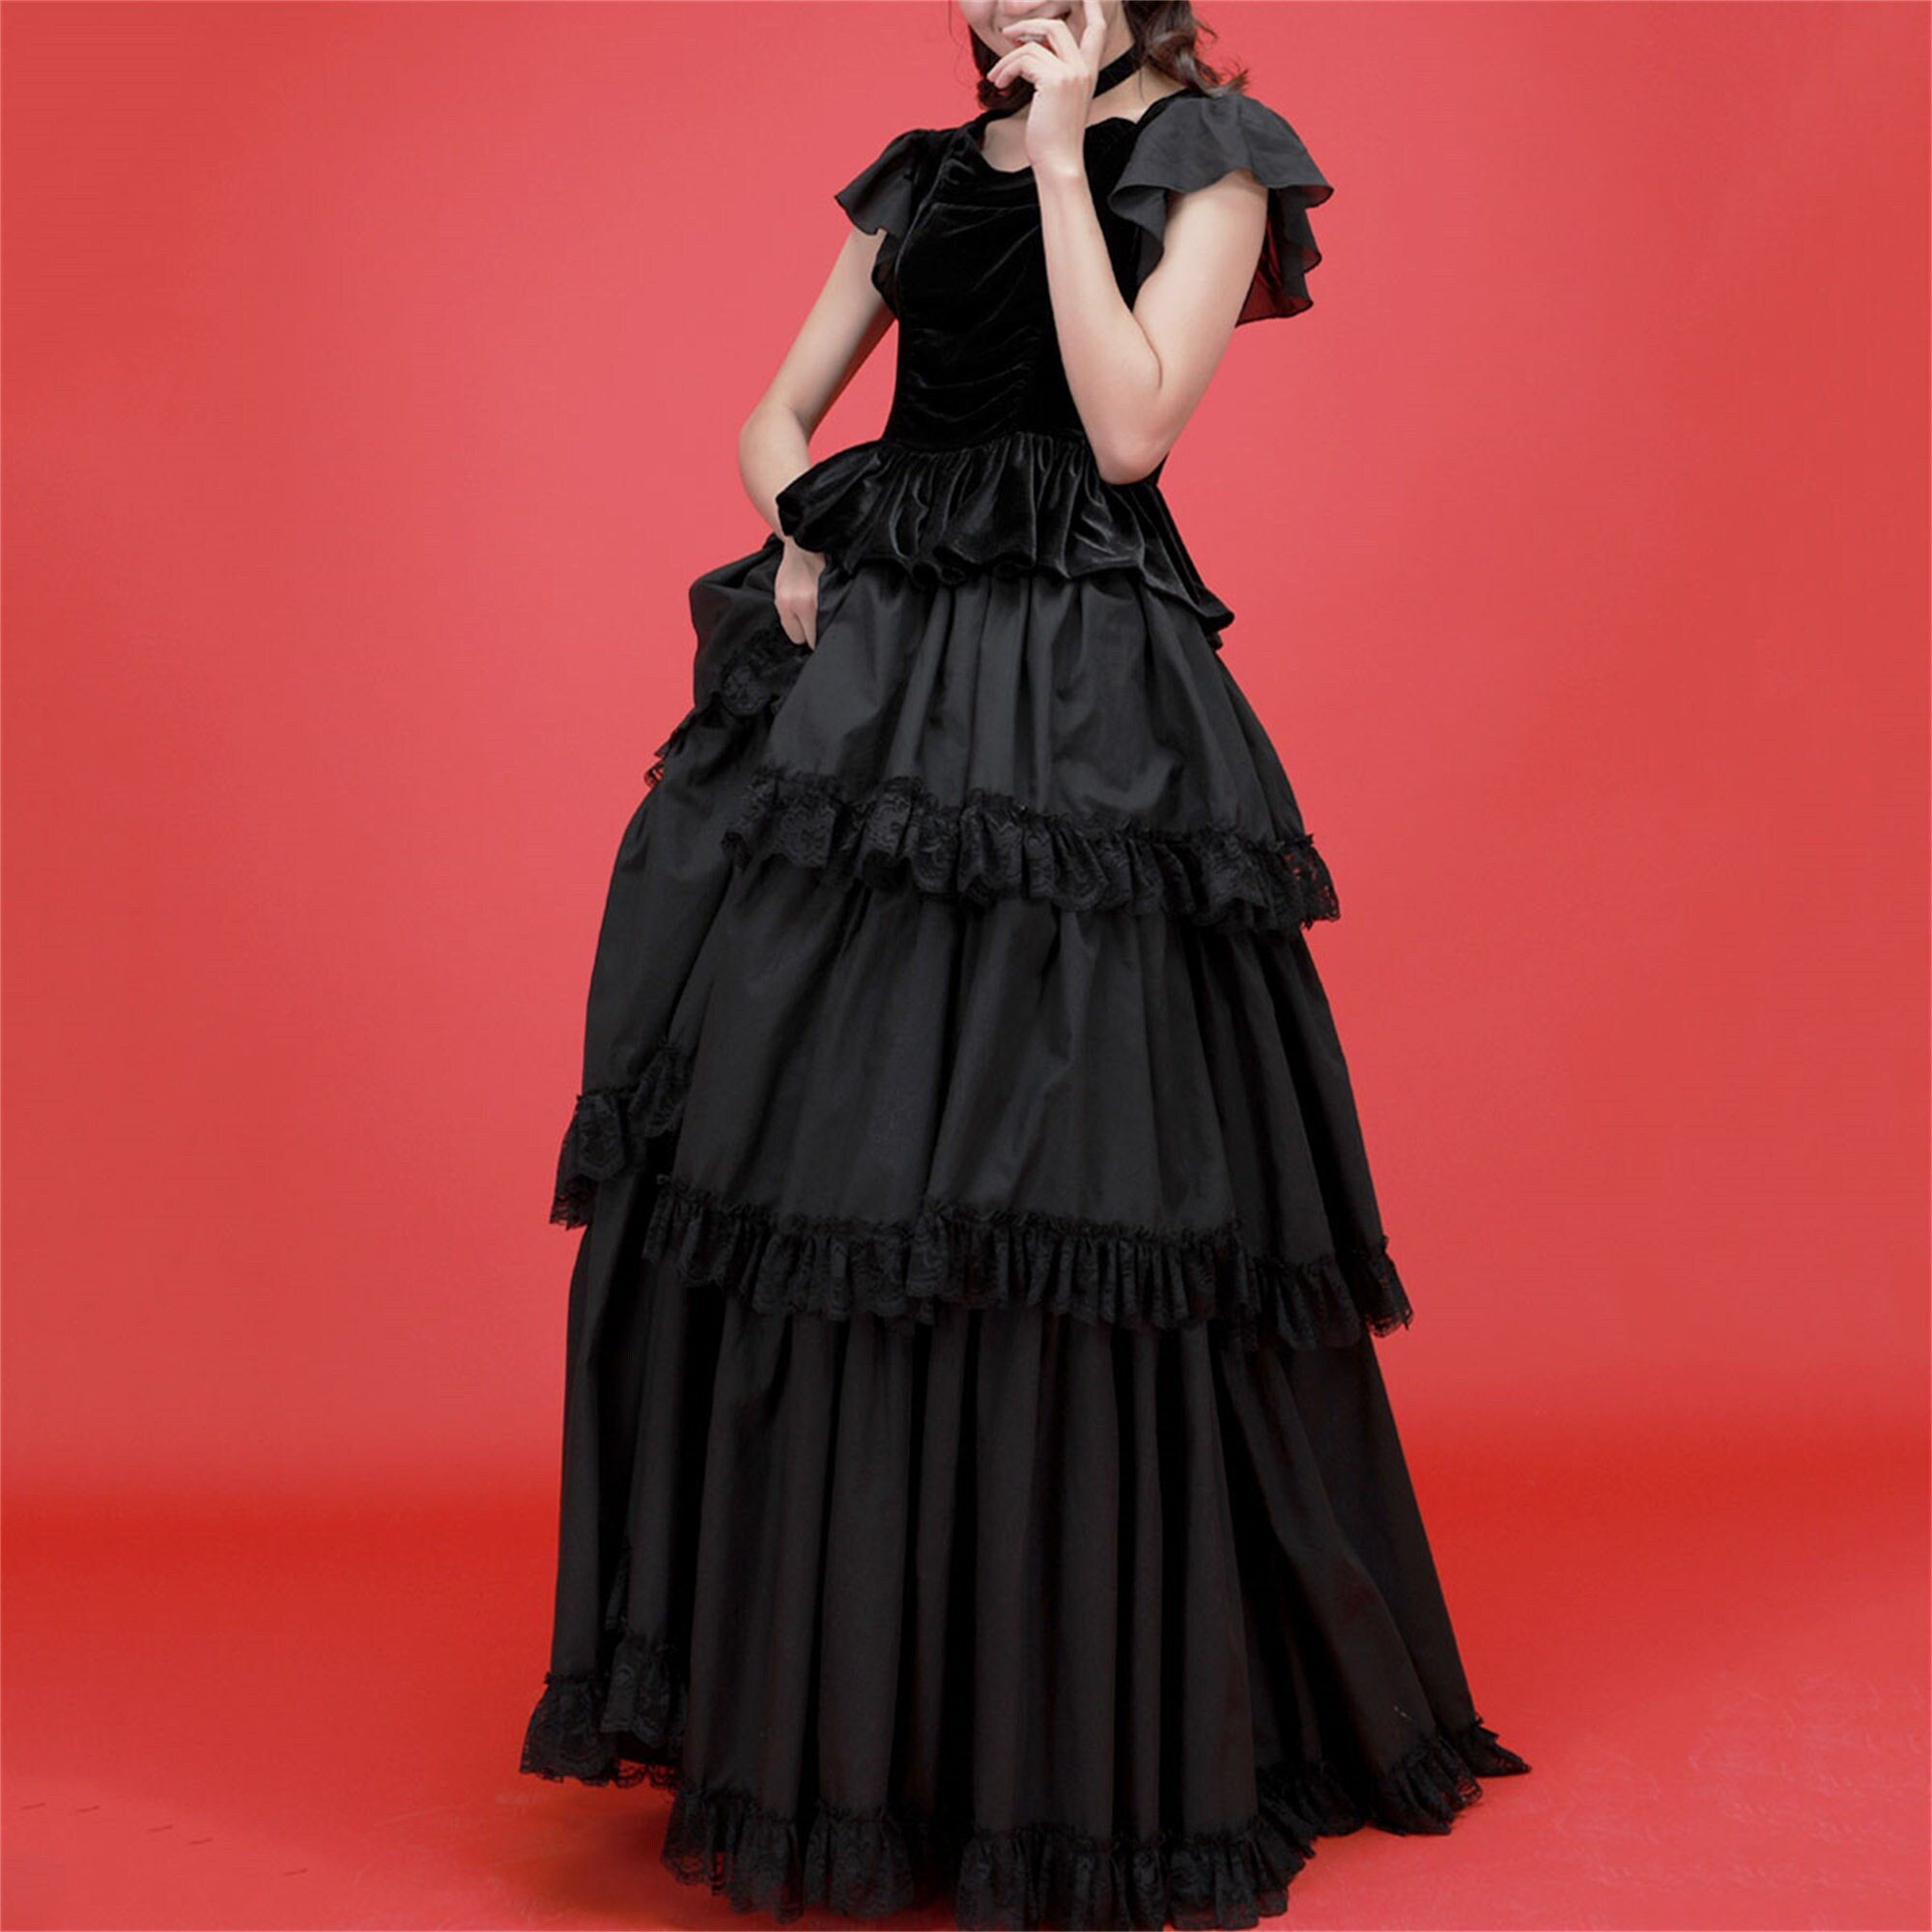 Y2K Gothic Lolita Dress - Black Corset Skirt with Lace Hem